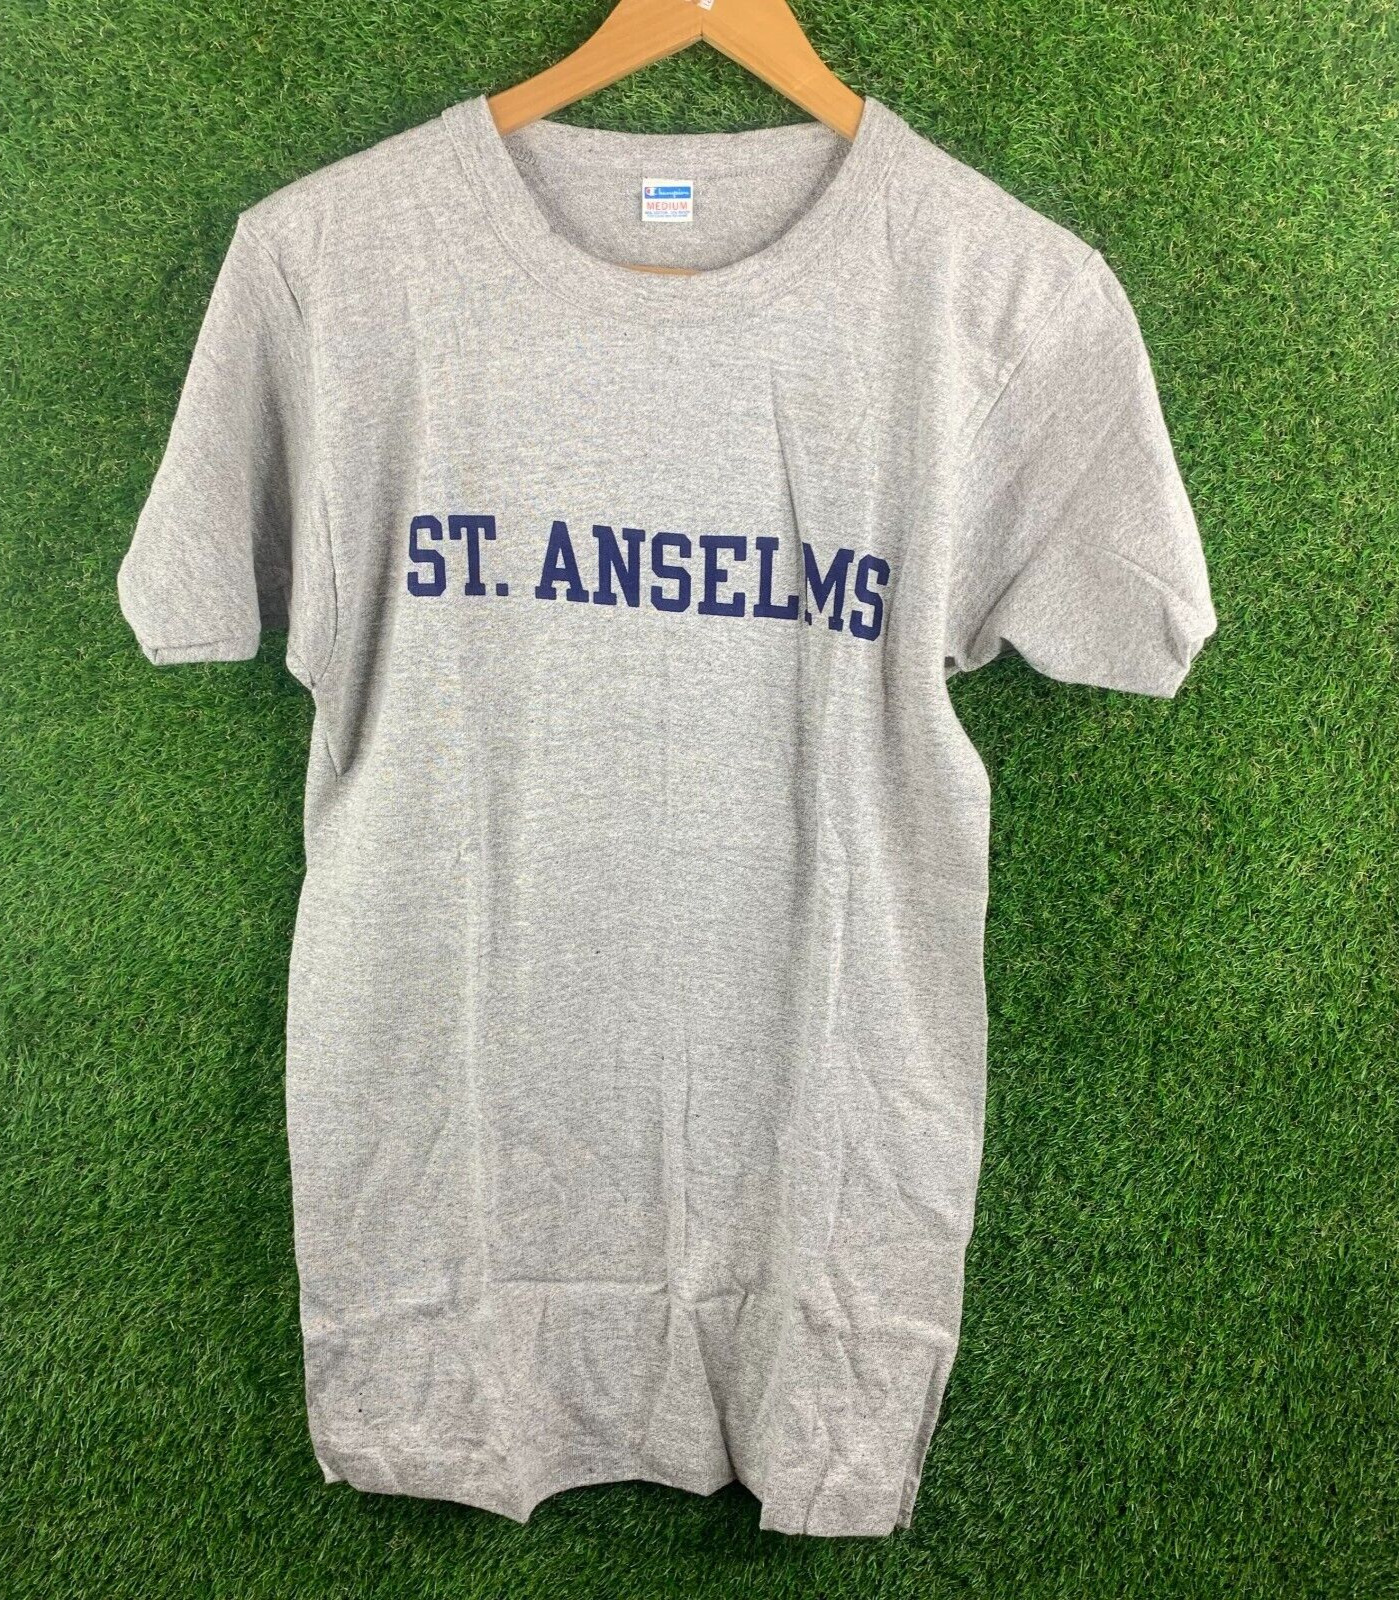 Vintage 1970s Champion St. Anselms Rare Gray T-Shirt Size Med